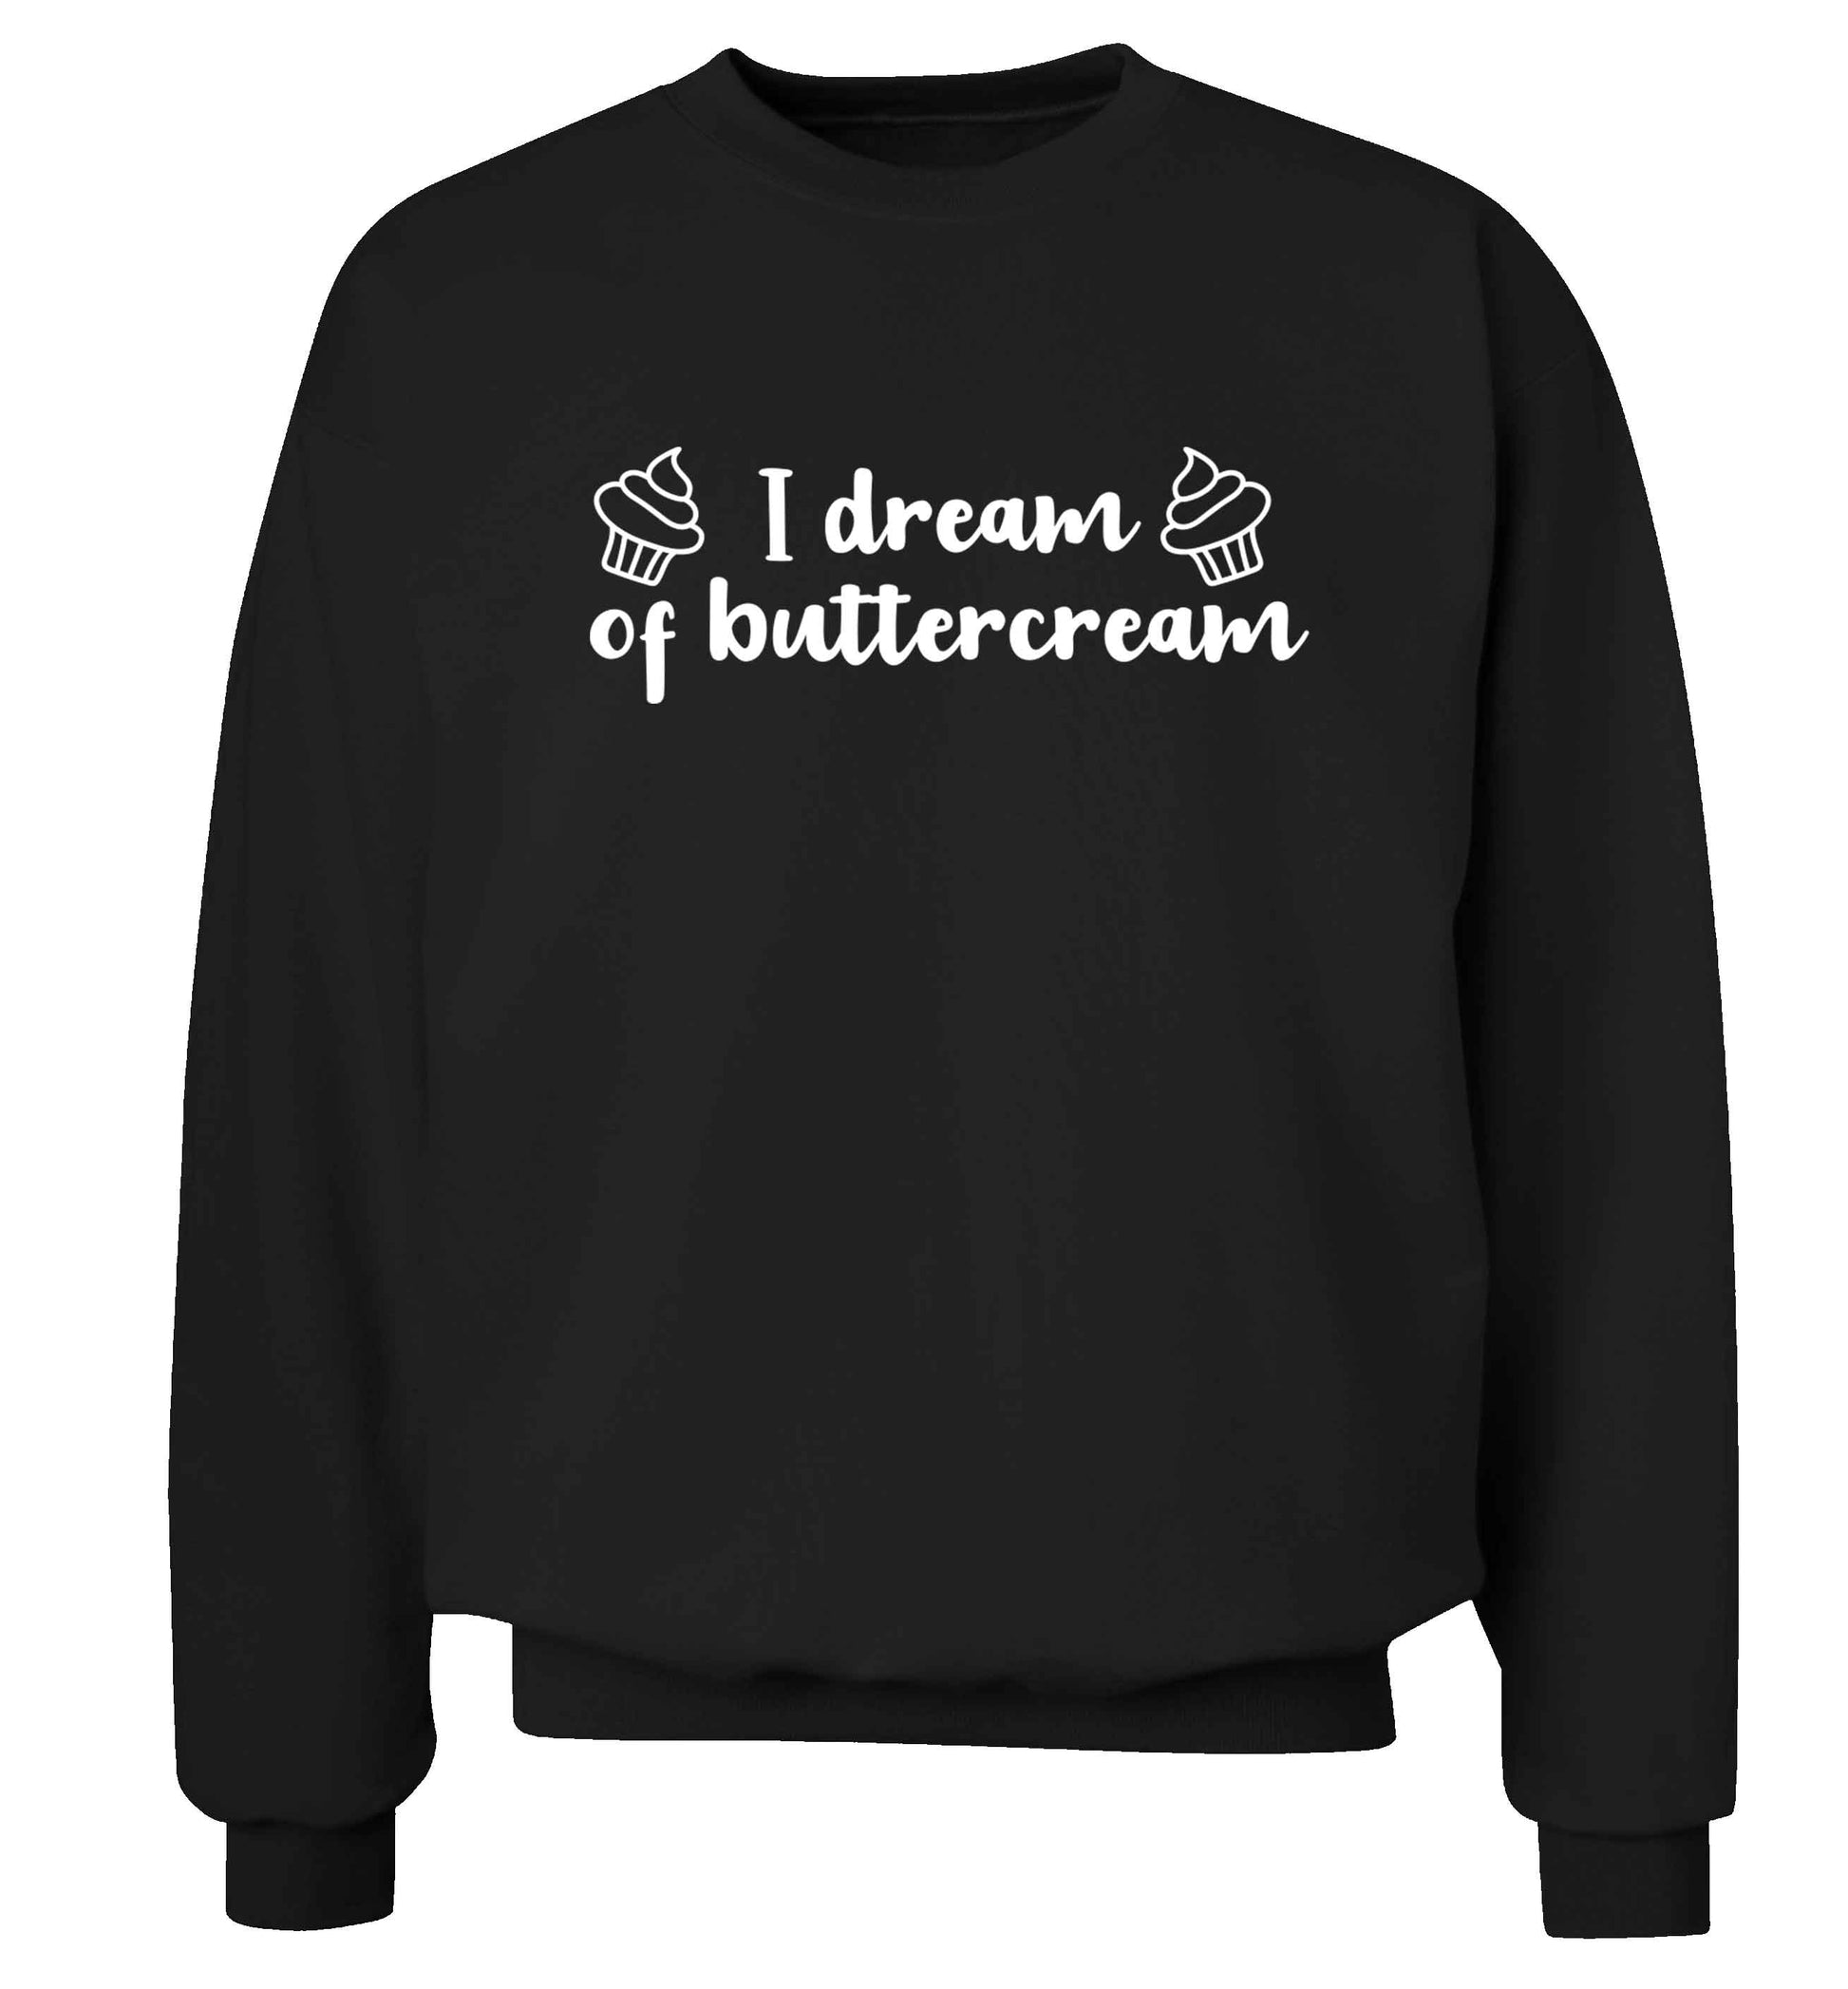 I dream of buttercream Adult's unisex black Sweater 2XL